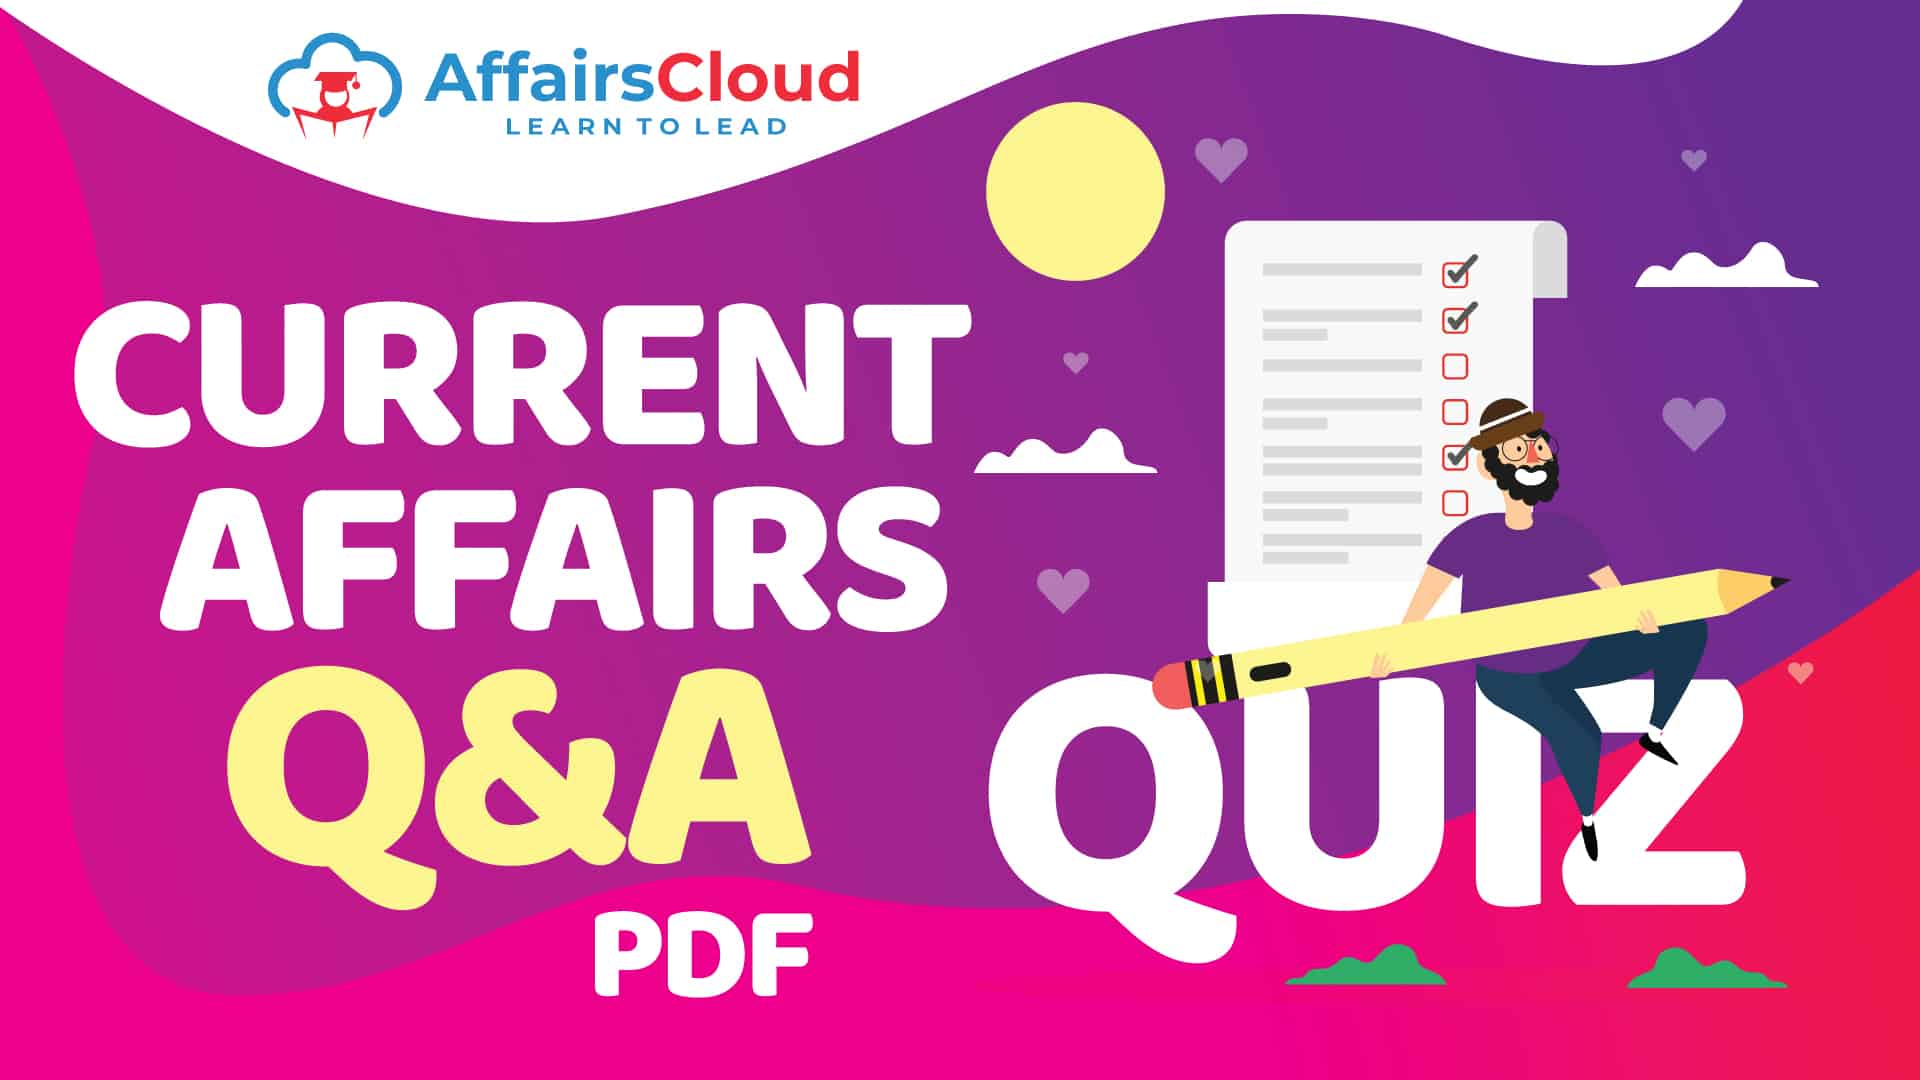 Q&A PDF Quiz